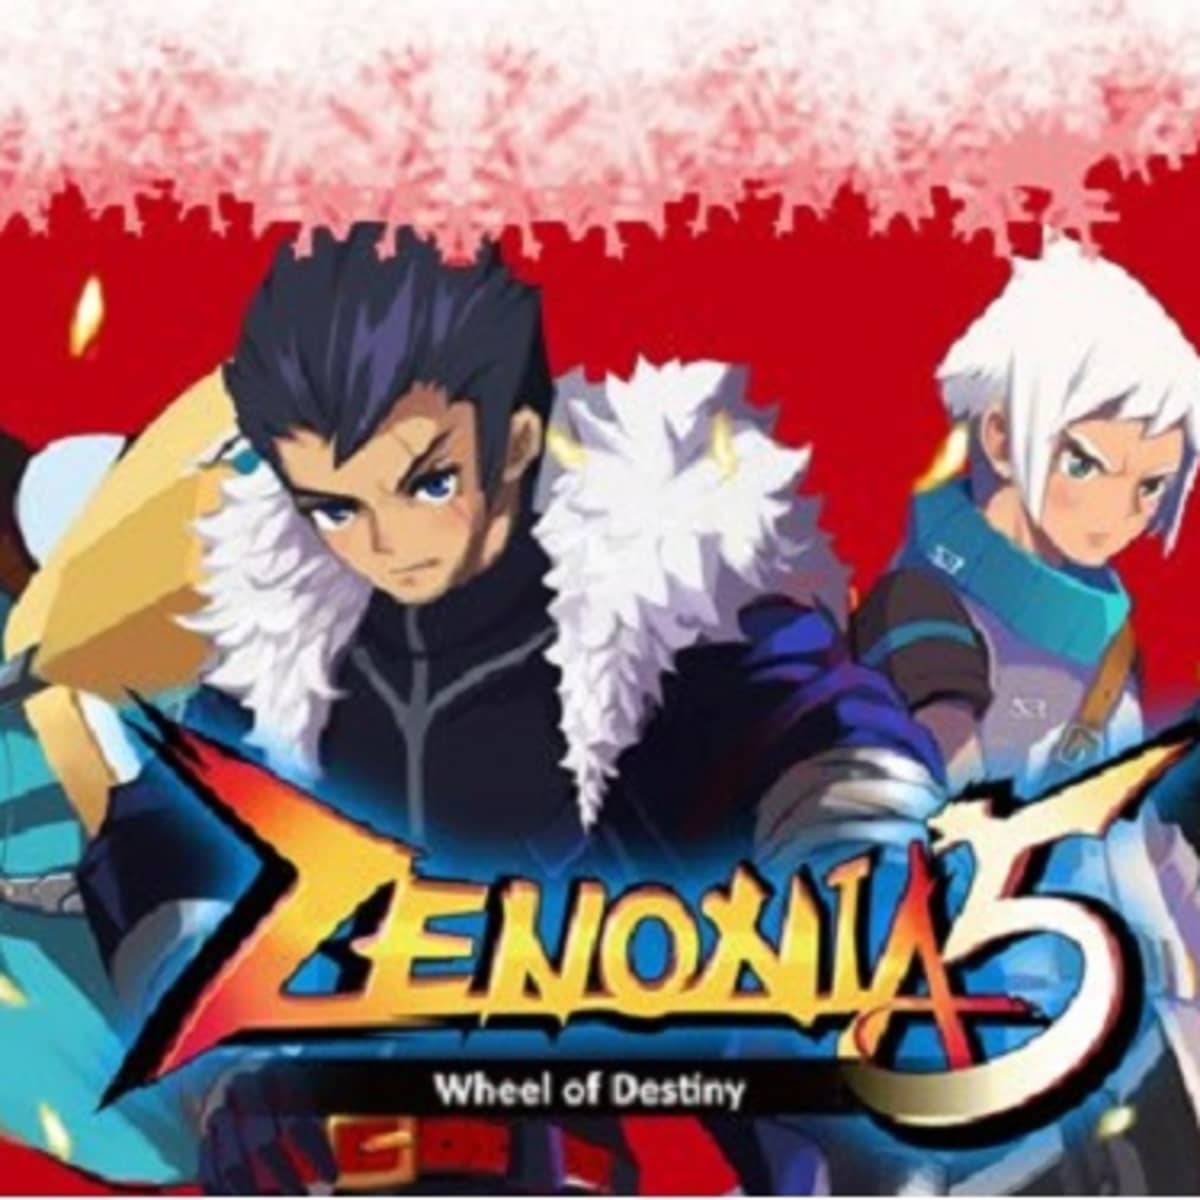 zenonia 1 are you forced to break the gem in deciet cae